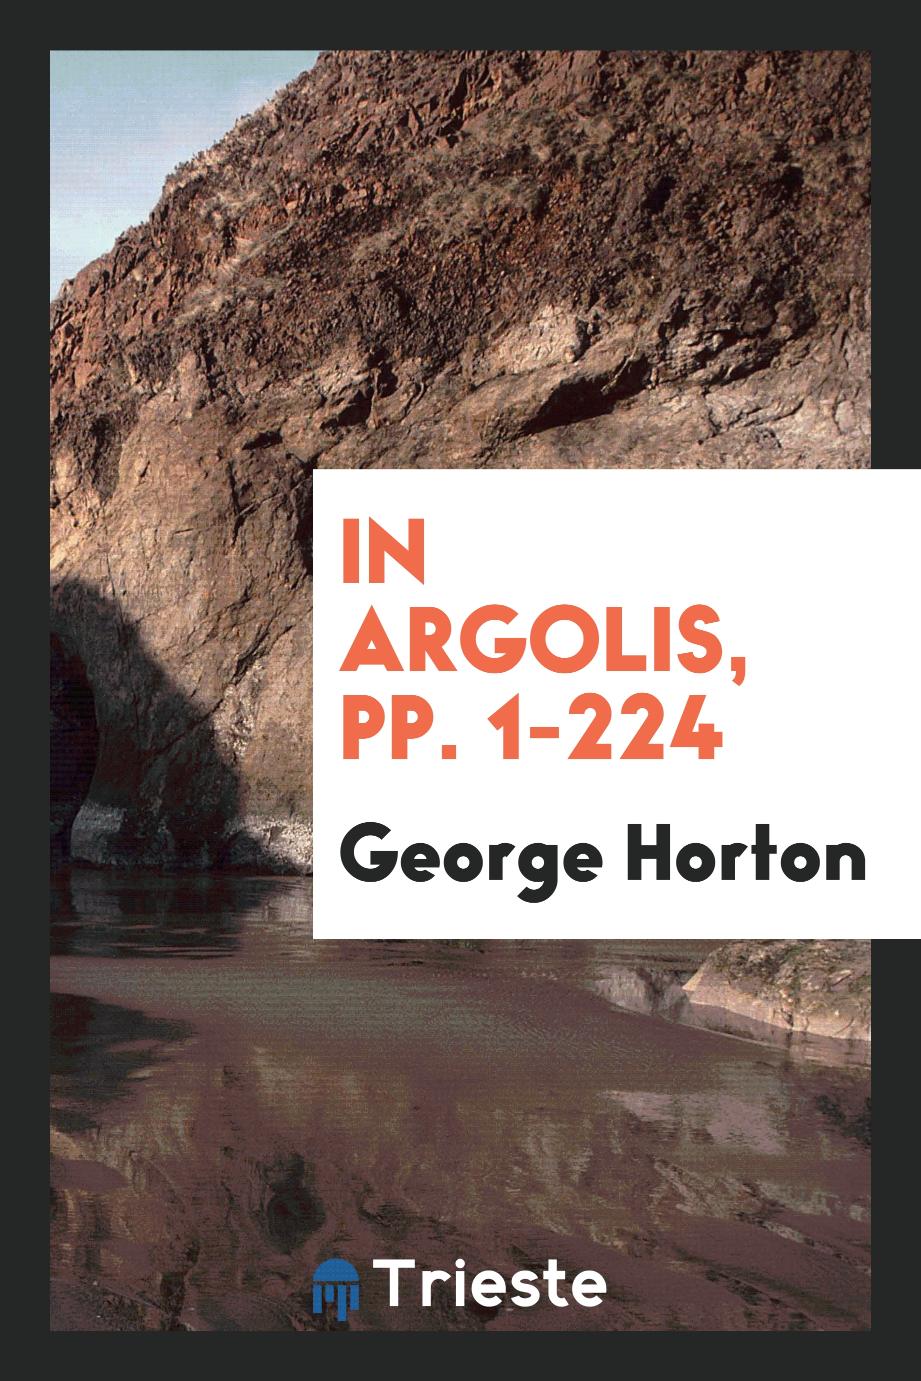 In Argolis, pp. 1-224